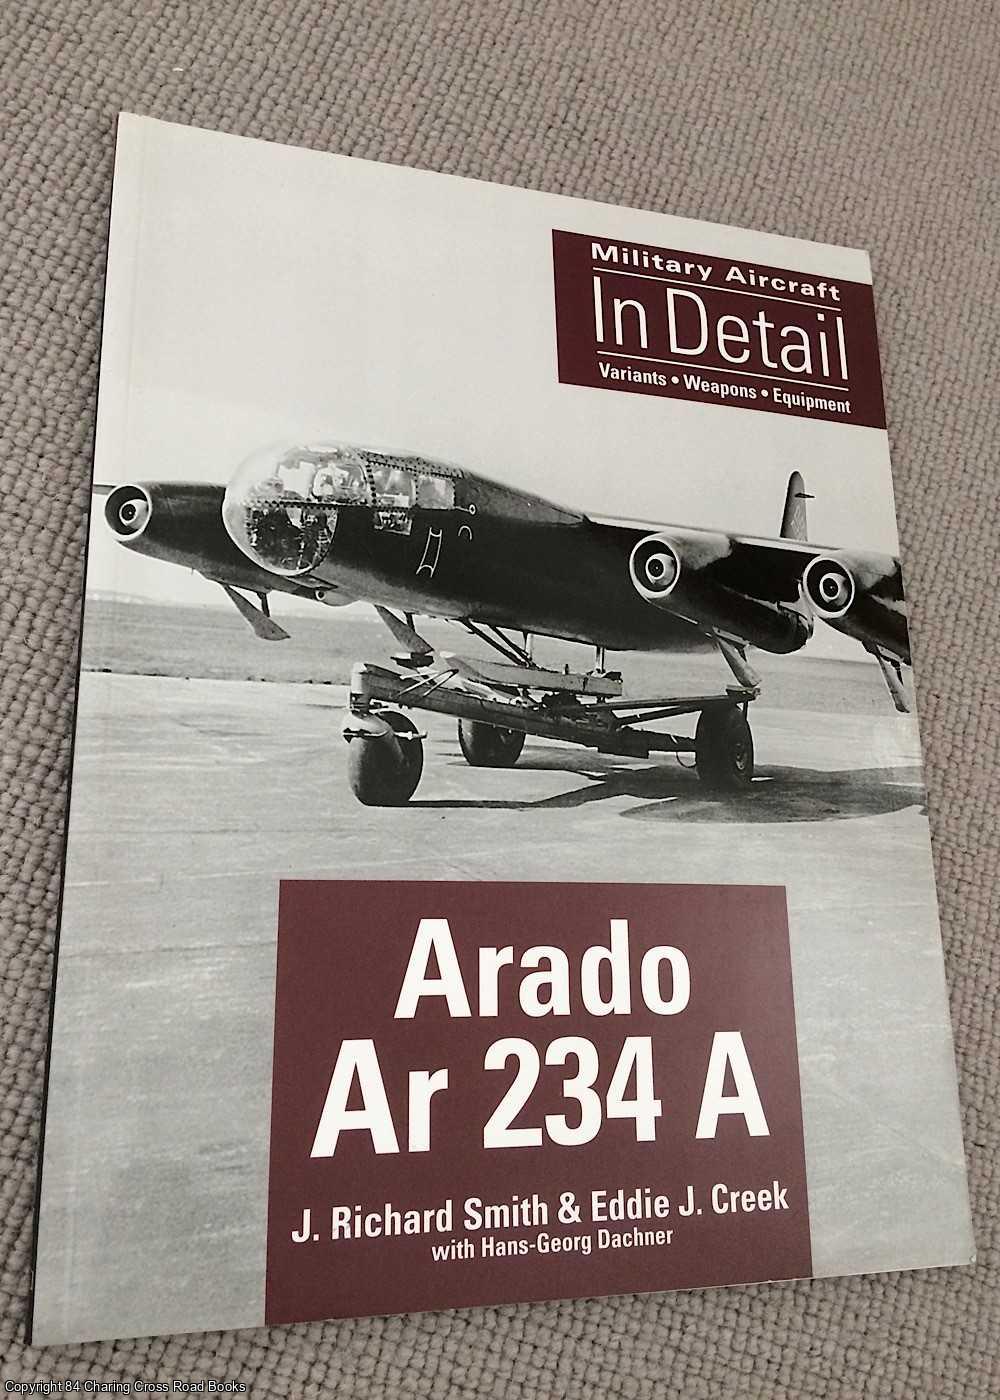 Hans-Georg Dachner, Eddie J. Creek, J. Richard Smith - Arado Ar 234 A - Military Aircraft in Detail